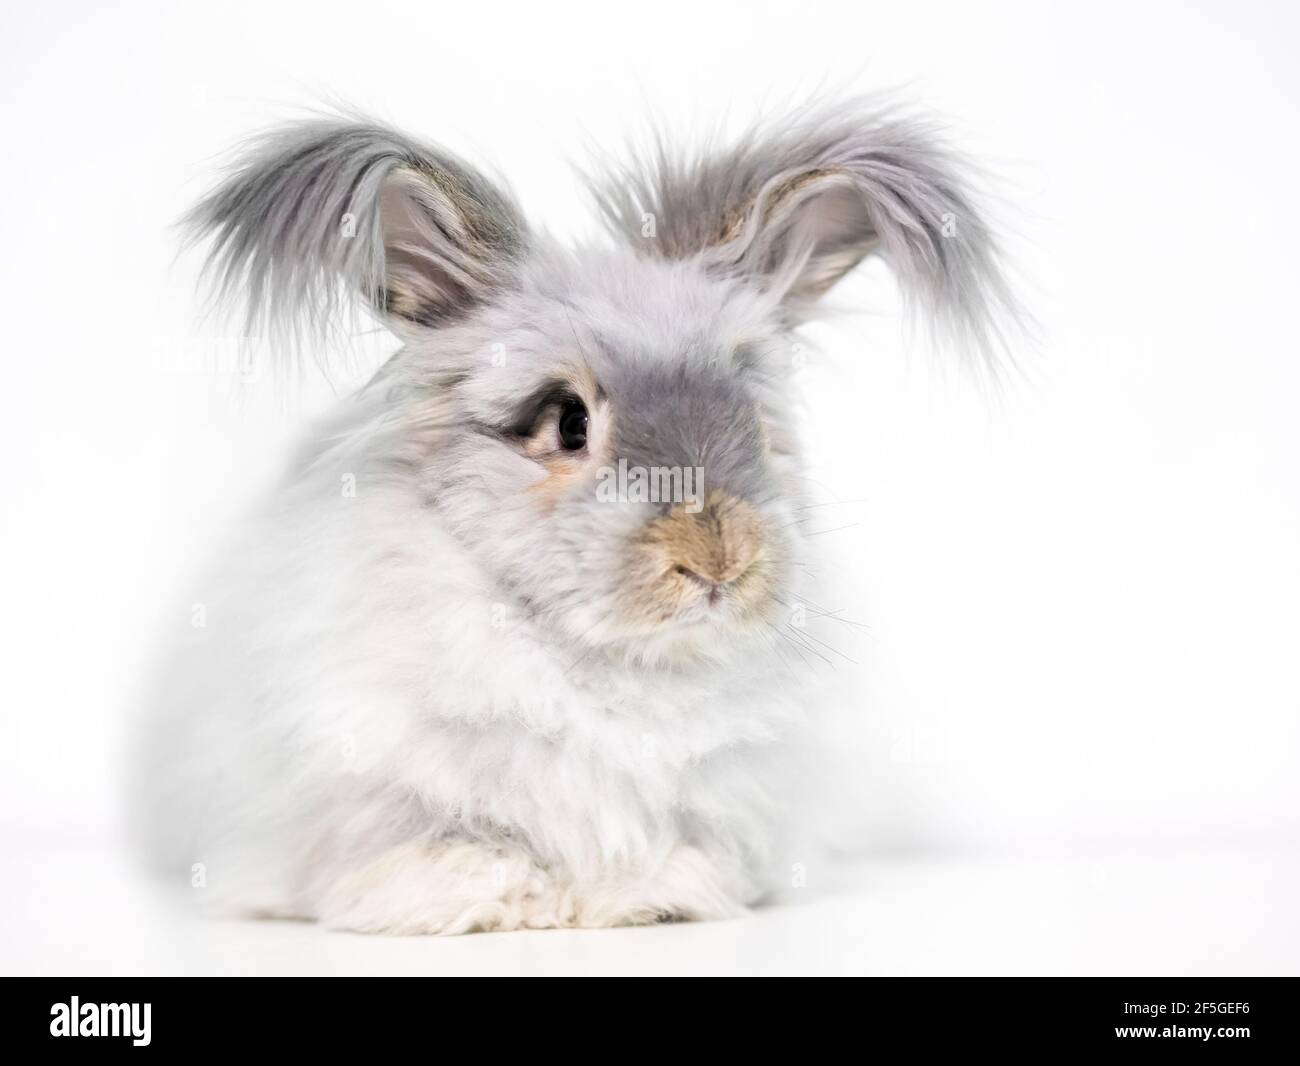 A furry English Angora rabbit with long hair on its ears Stock Photo